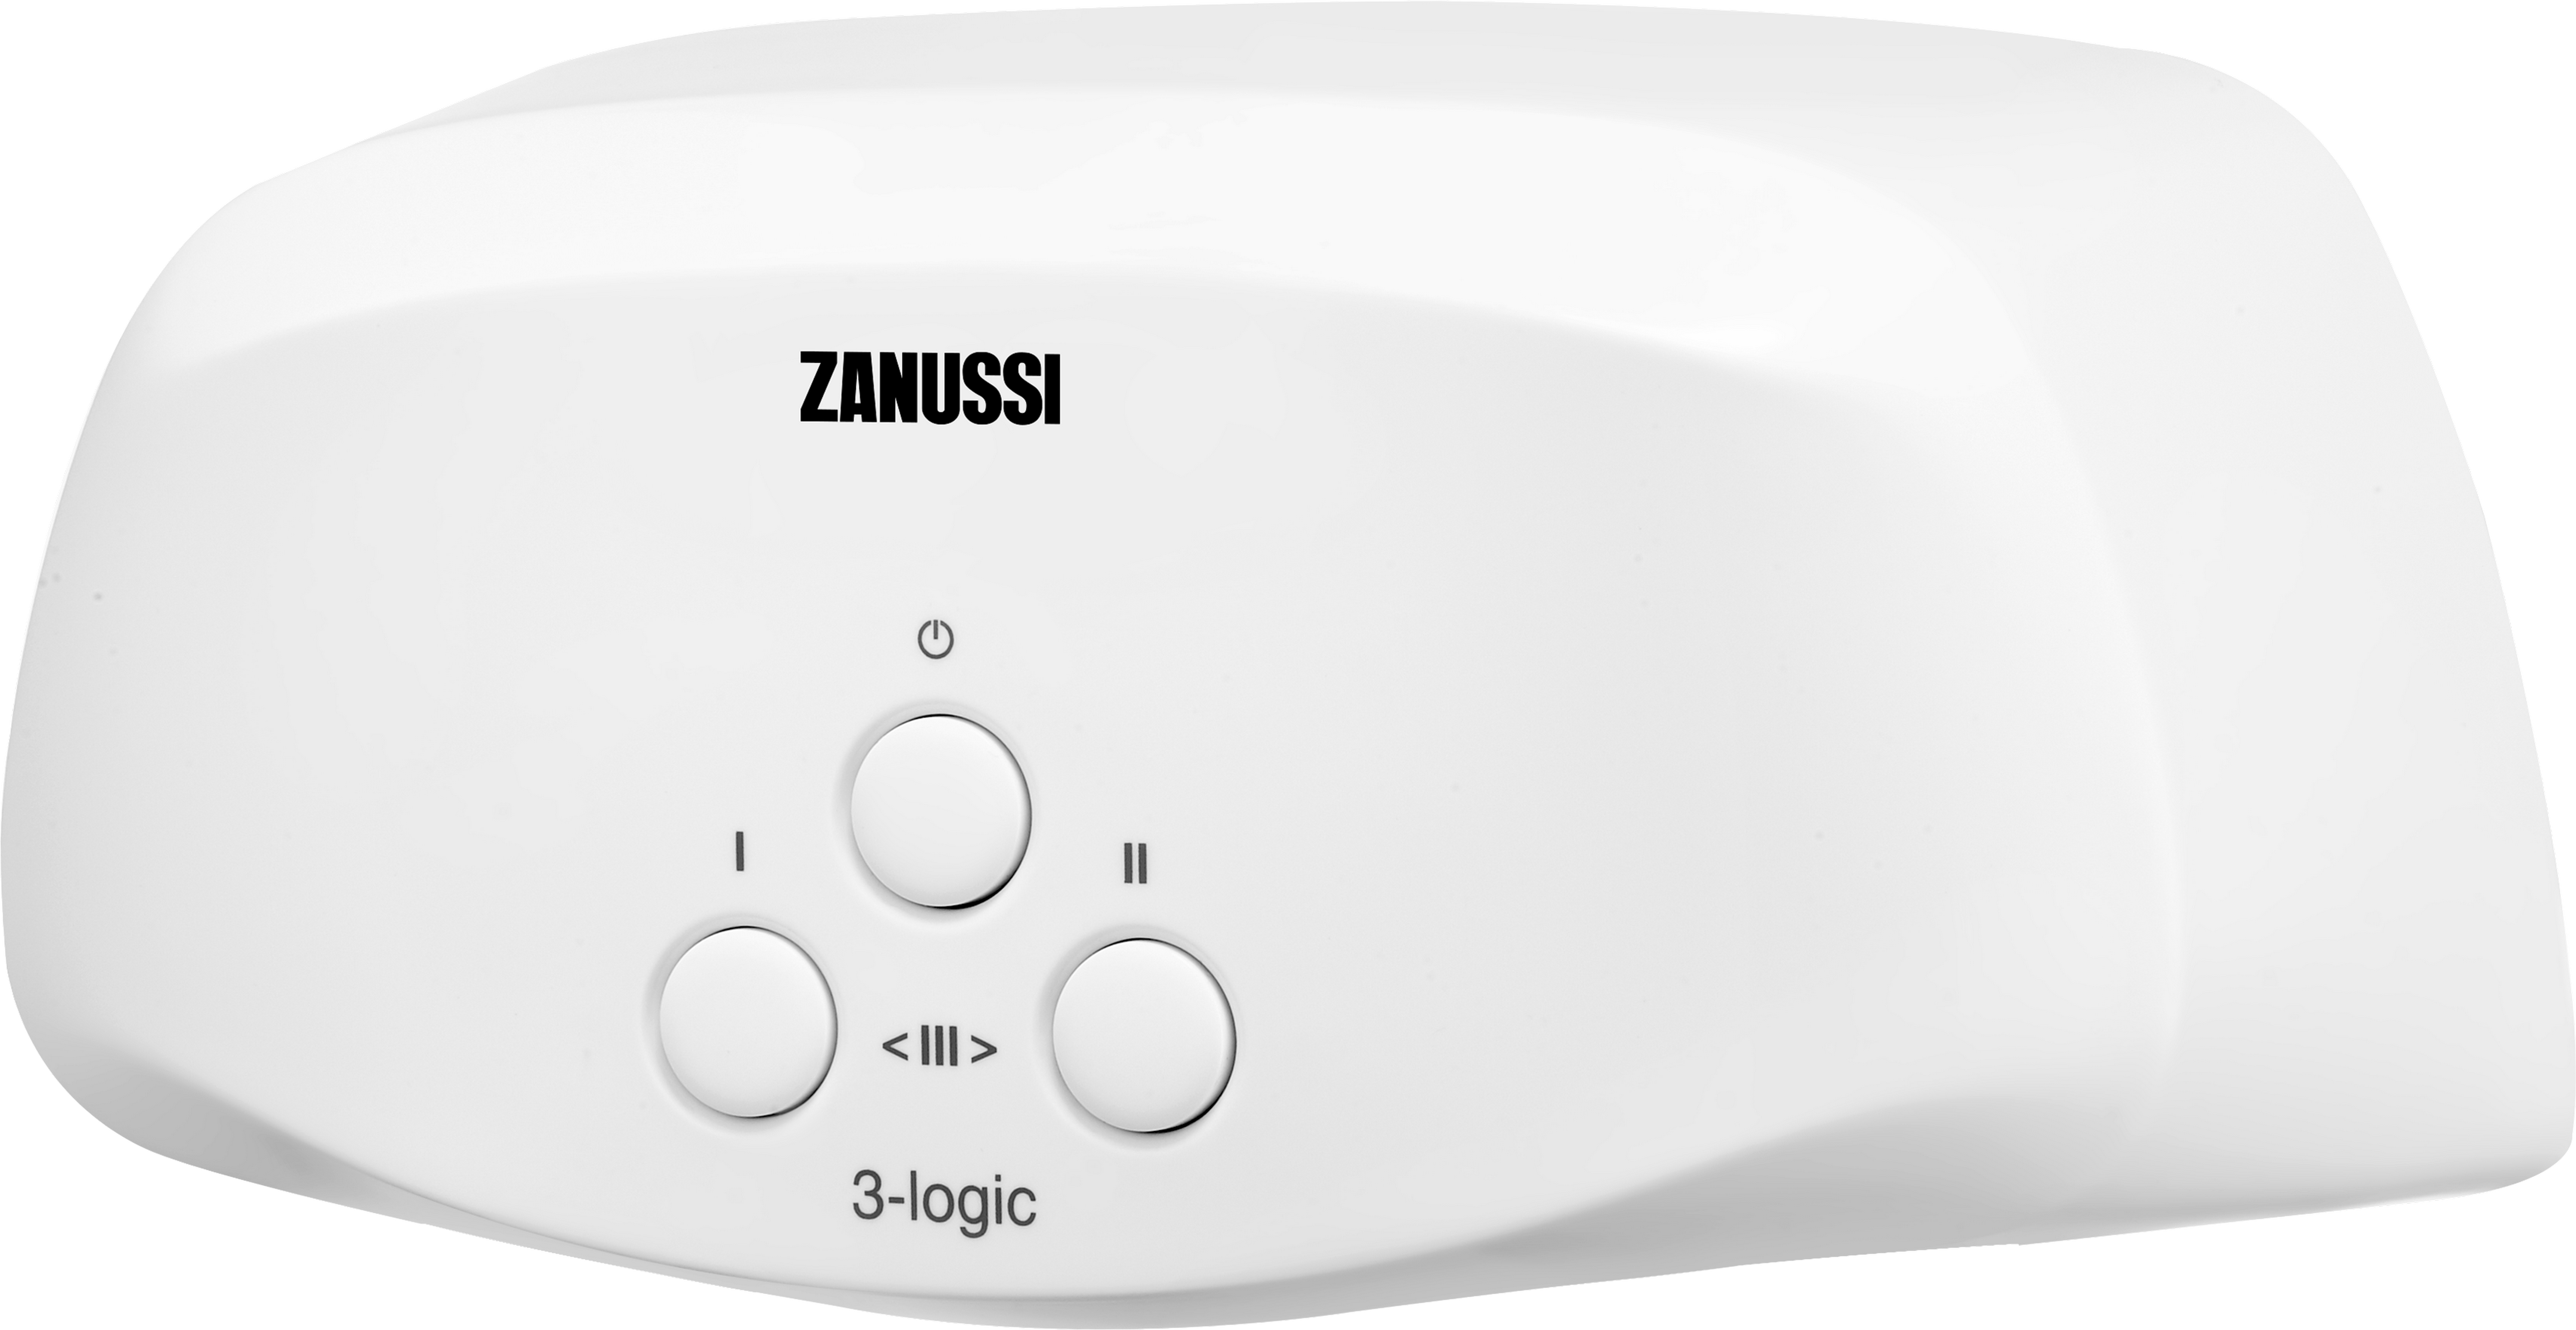 Проточный водонагреватель Zanussi 3-logic TS (6,5 кВт) цена 0.00 грн - фотография 2